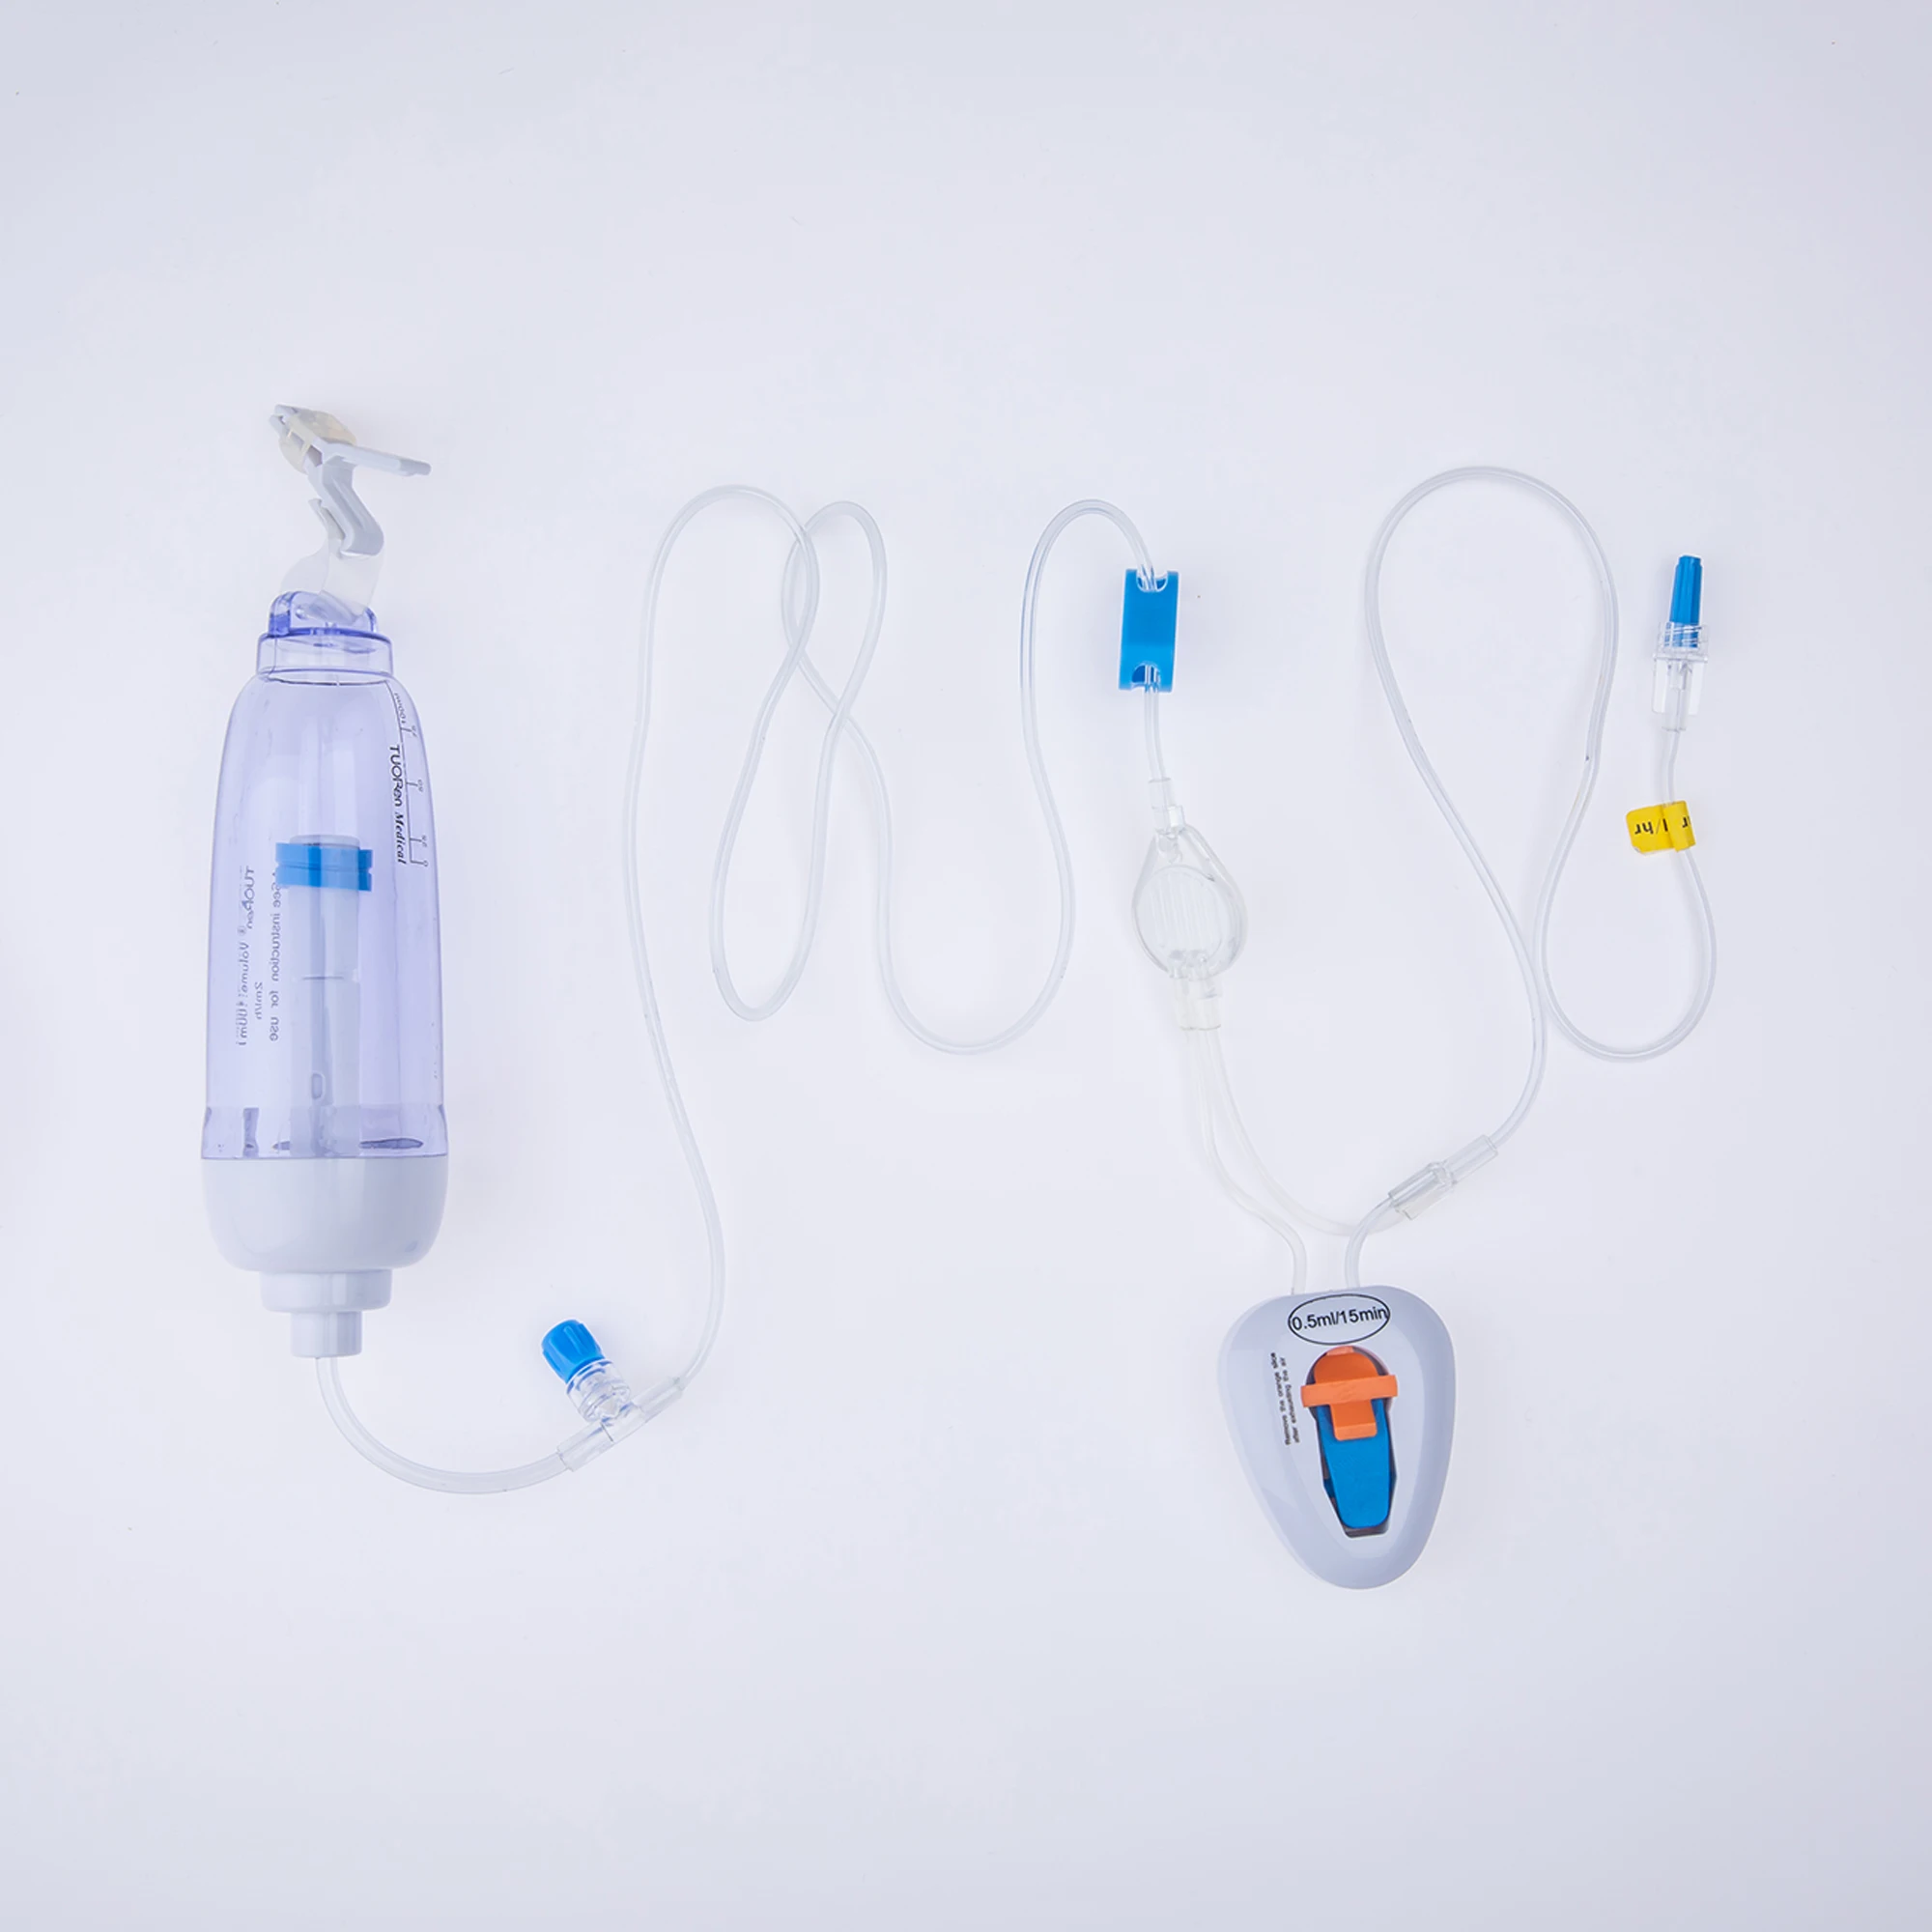 Tuoren disposable infusion pump iv infusion elastomeric 500ml hospital